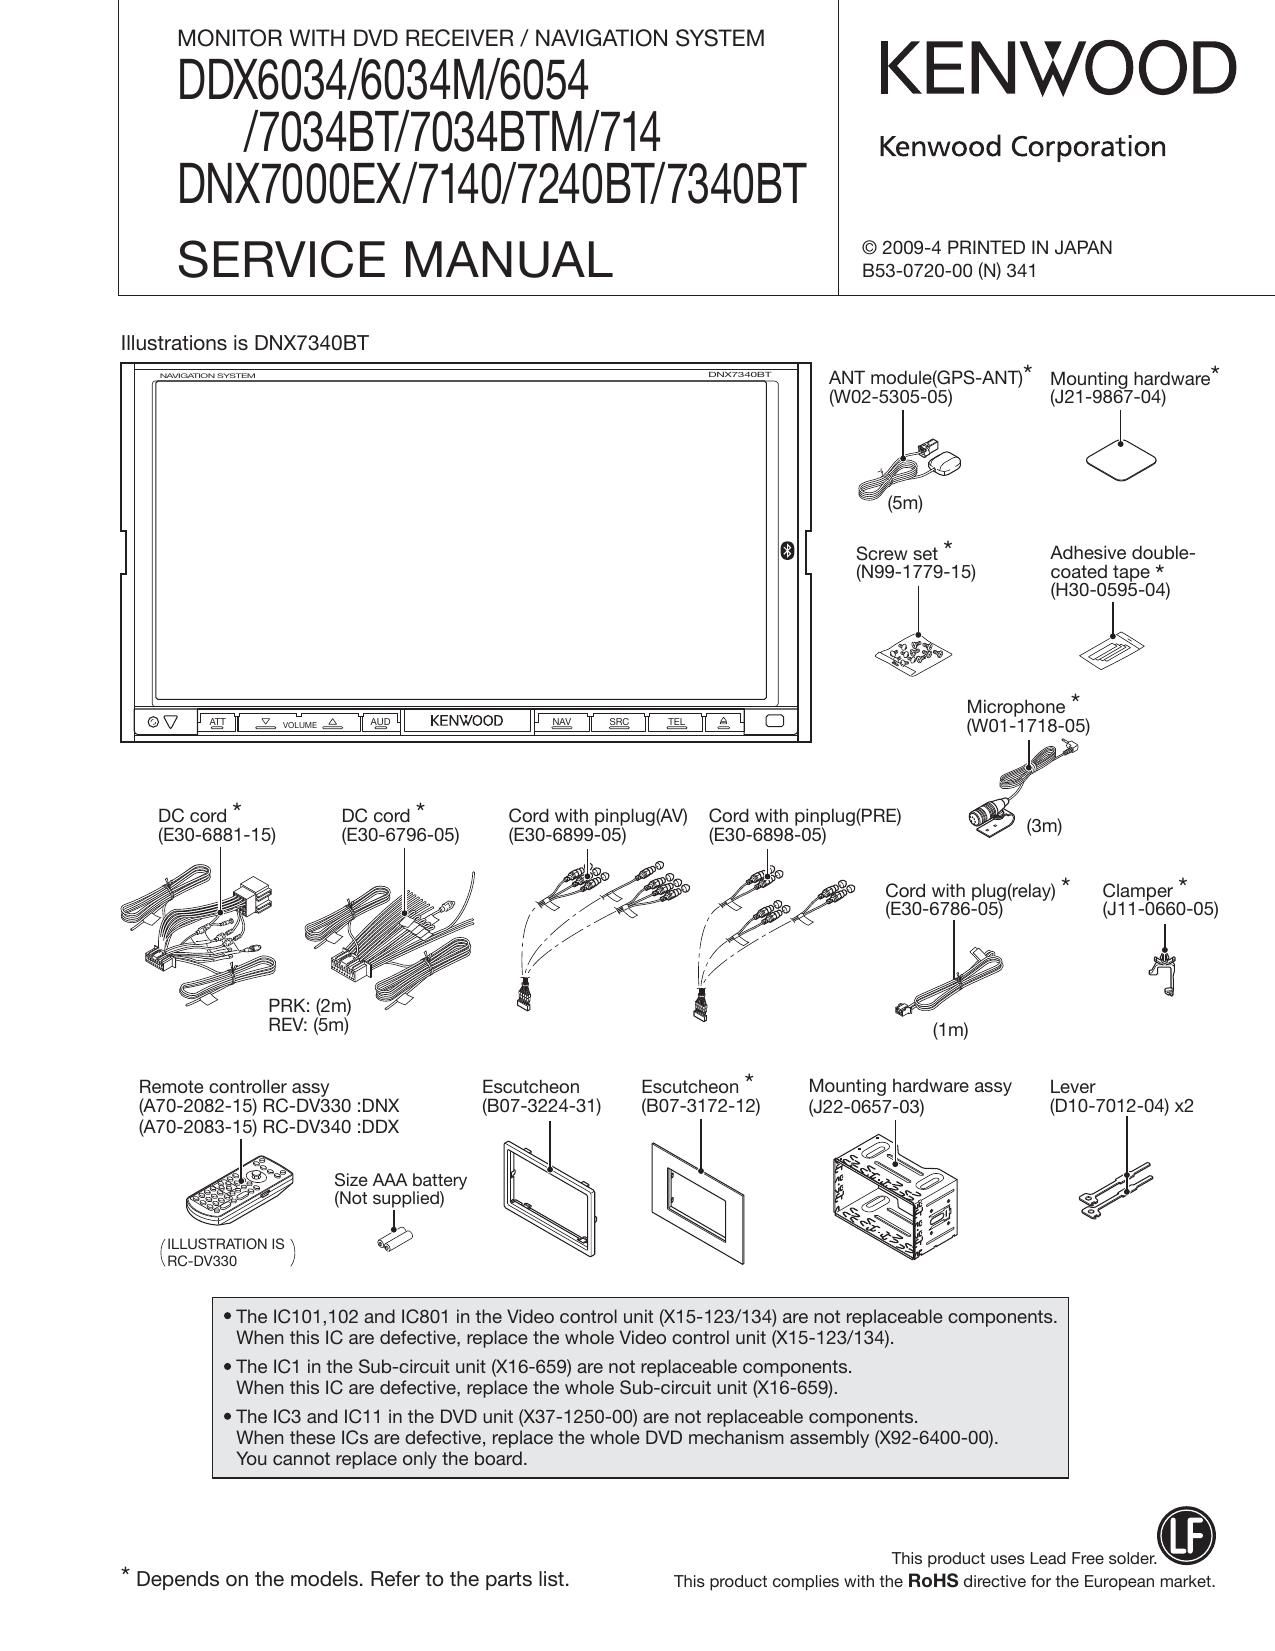 Kenwood DDX 6034 HU Service Manual